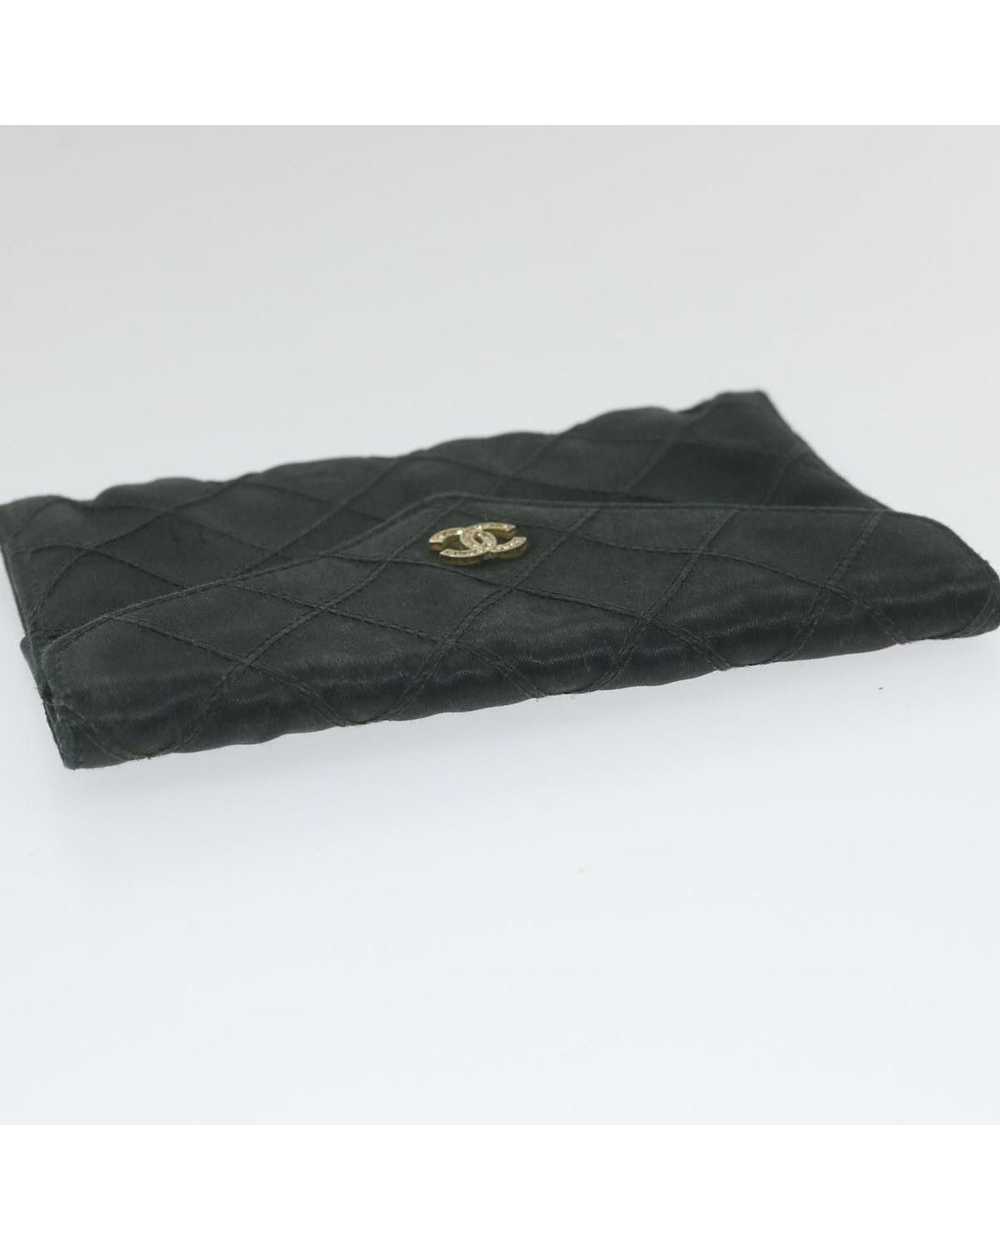 Chanel Black Nylon Pouch with CC Logo - image 5